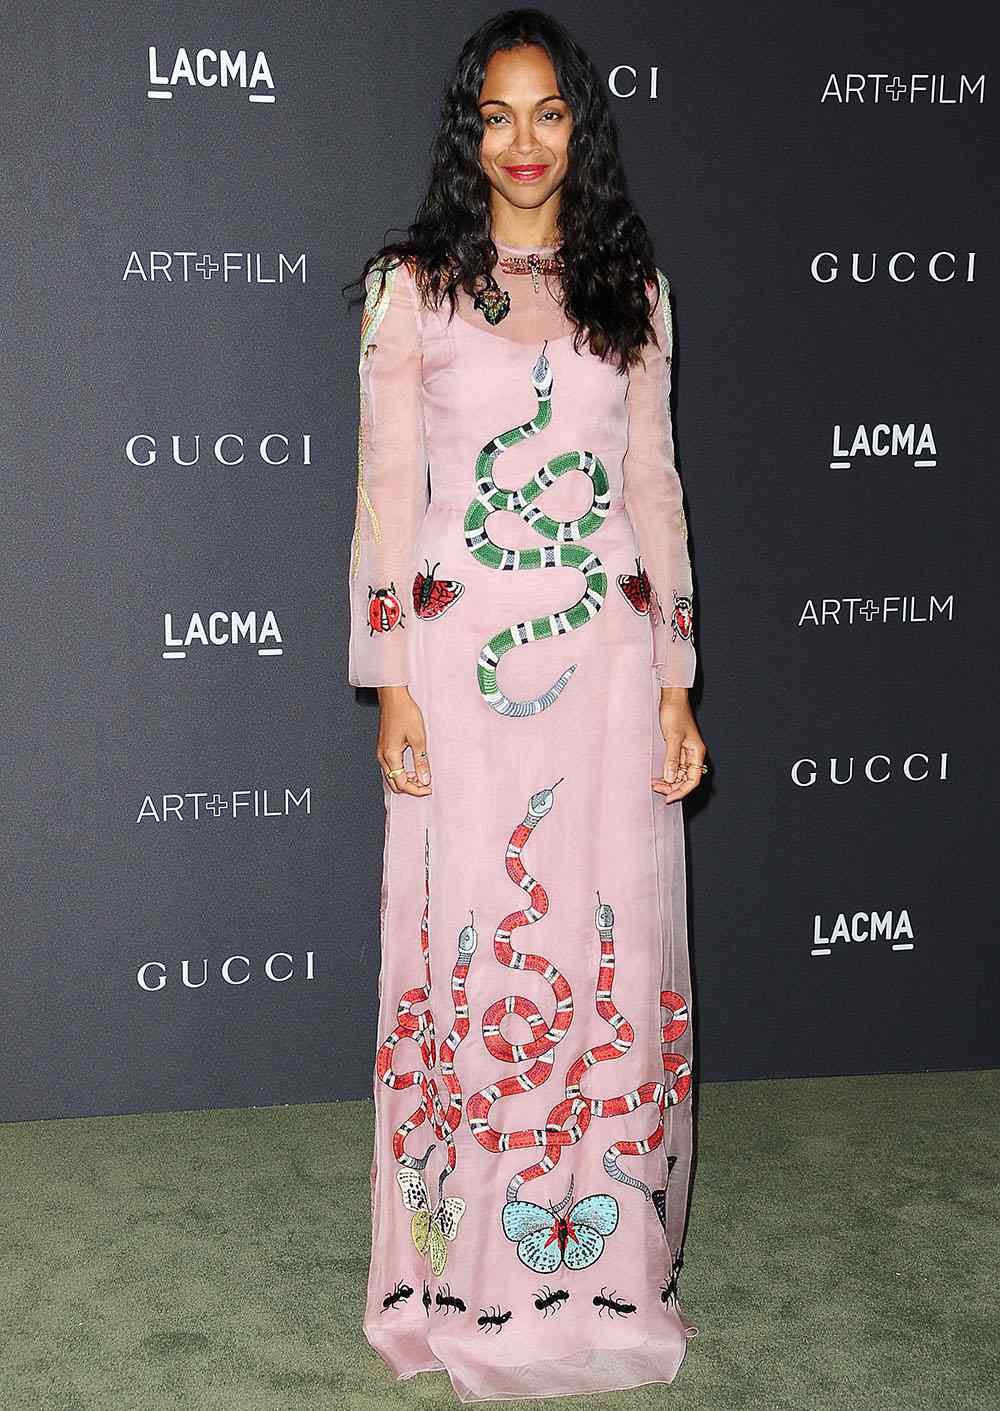 LOS ANGELES, CA - OCTOBER 29:  Actress Zoe Saldana attends the 2016 LACMA Art + Film gala at LACMA on October 29, 2016 in Los Angeles, California.  (Photo by Jason LaVeris/FilmMagic)